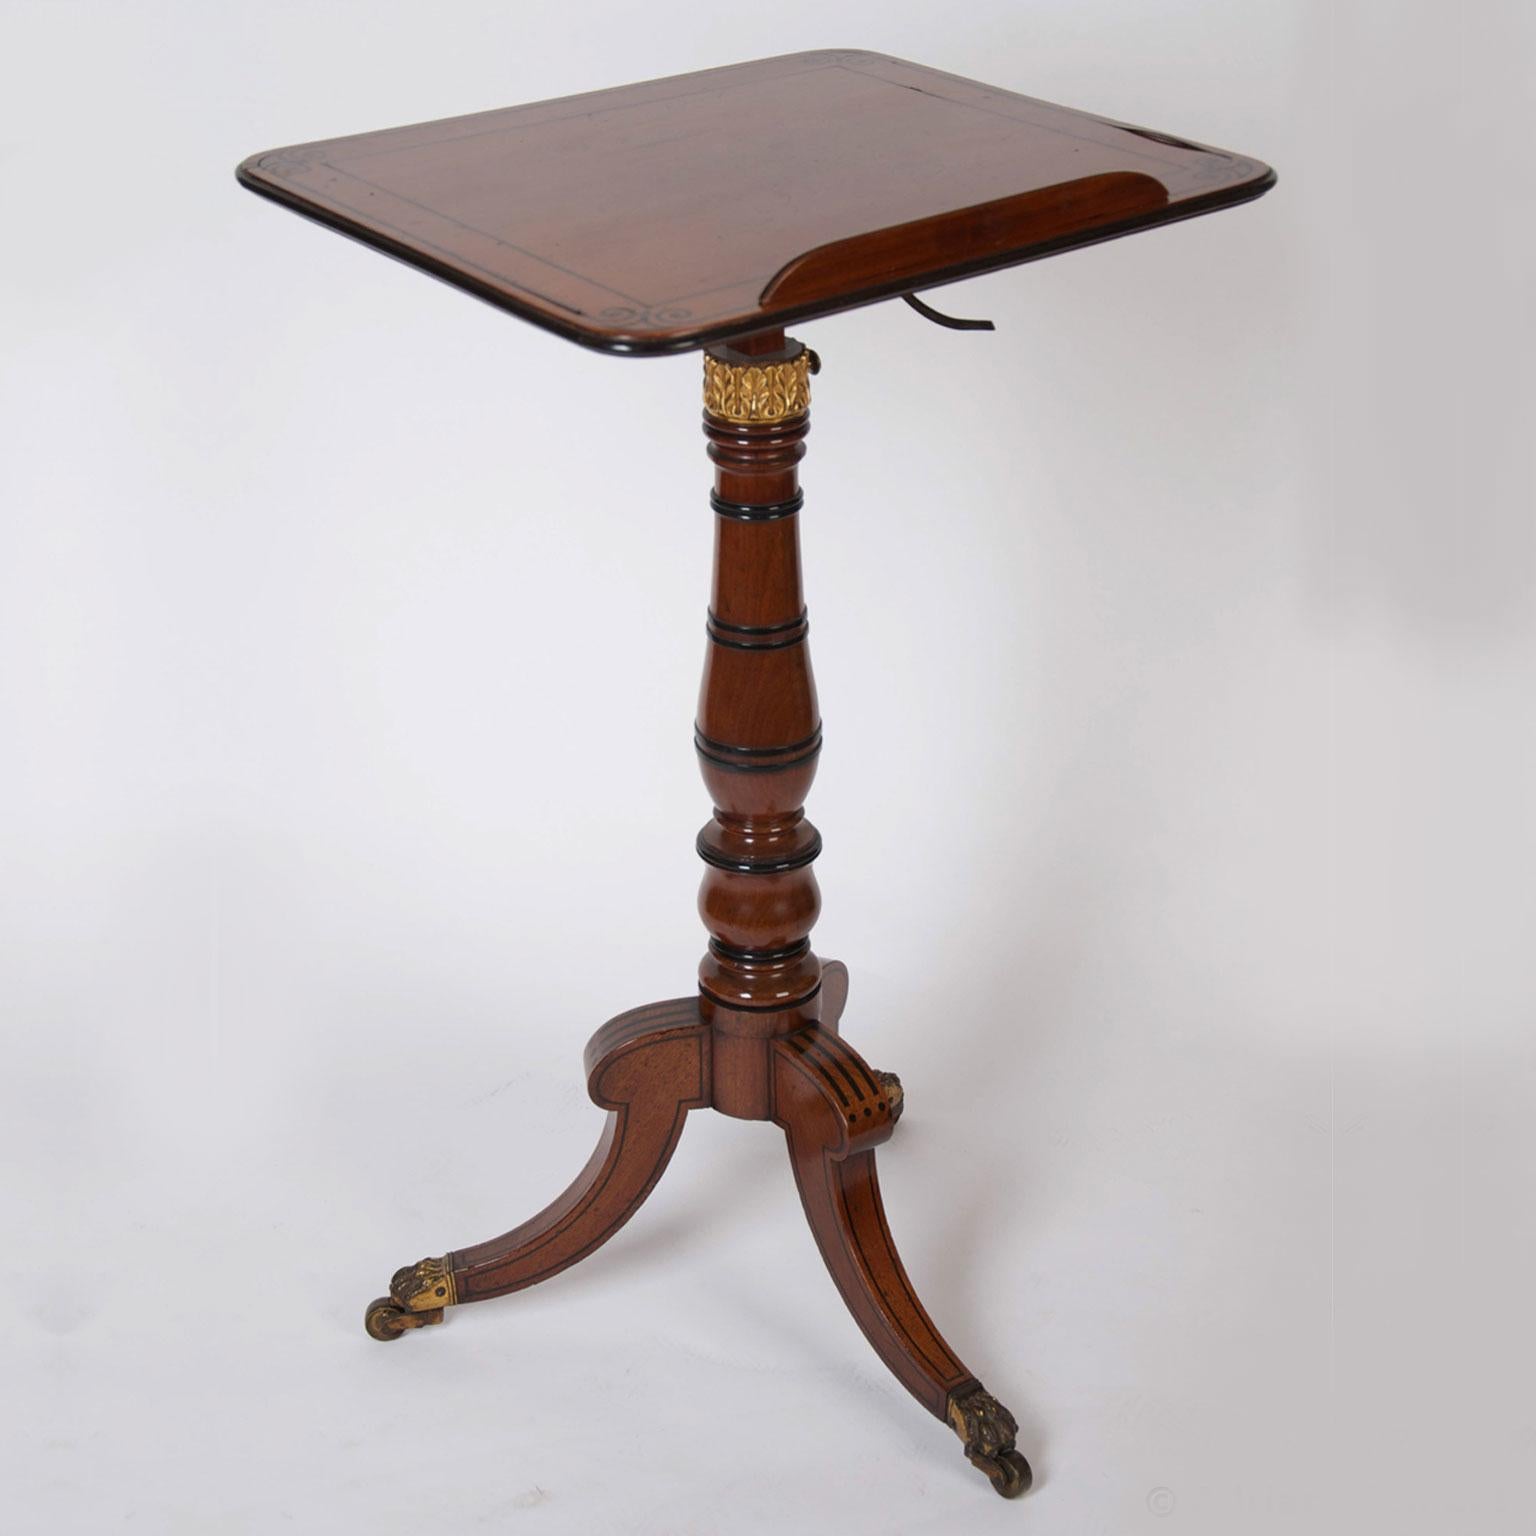 A rare English Regency period mahogany adjustable reading table. 

English, circa 1820.